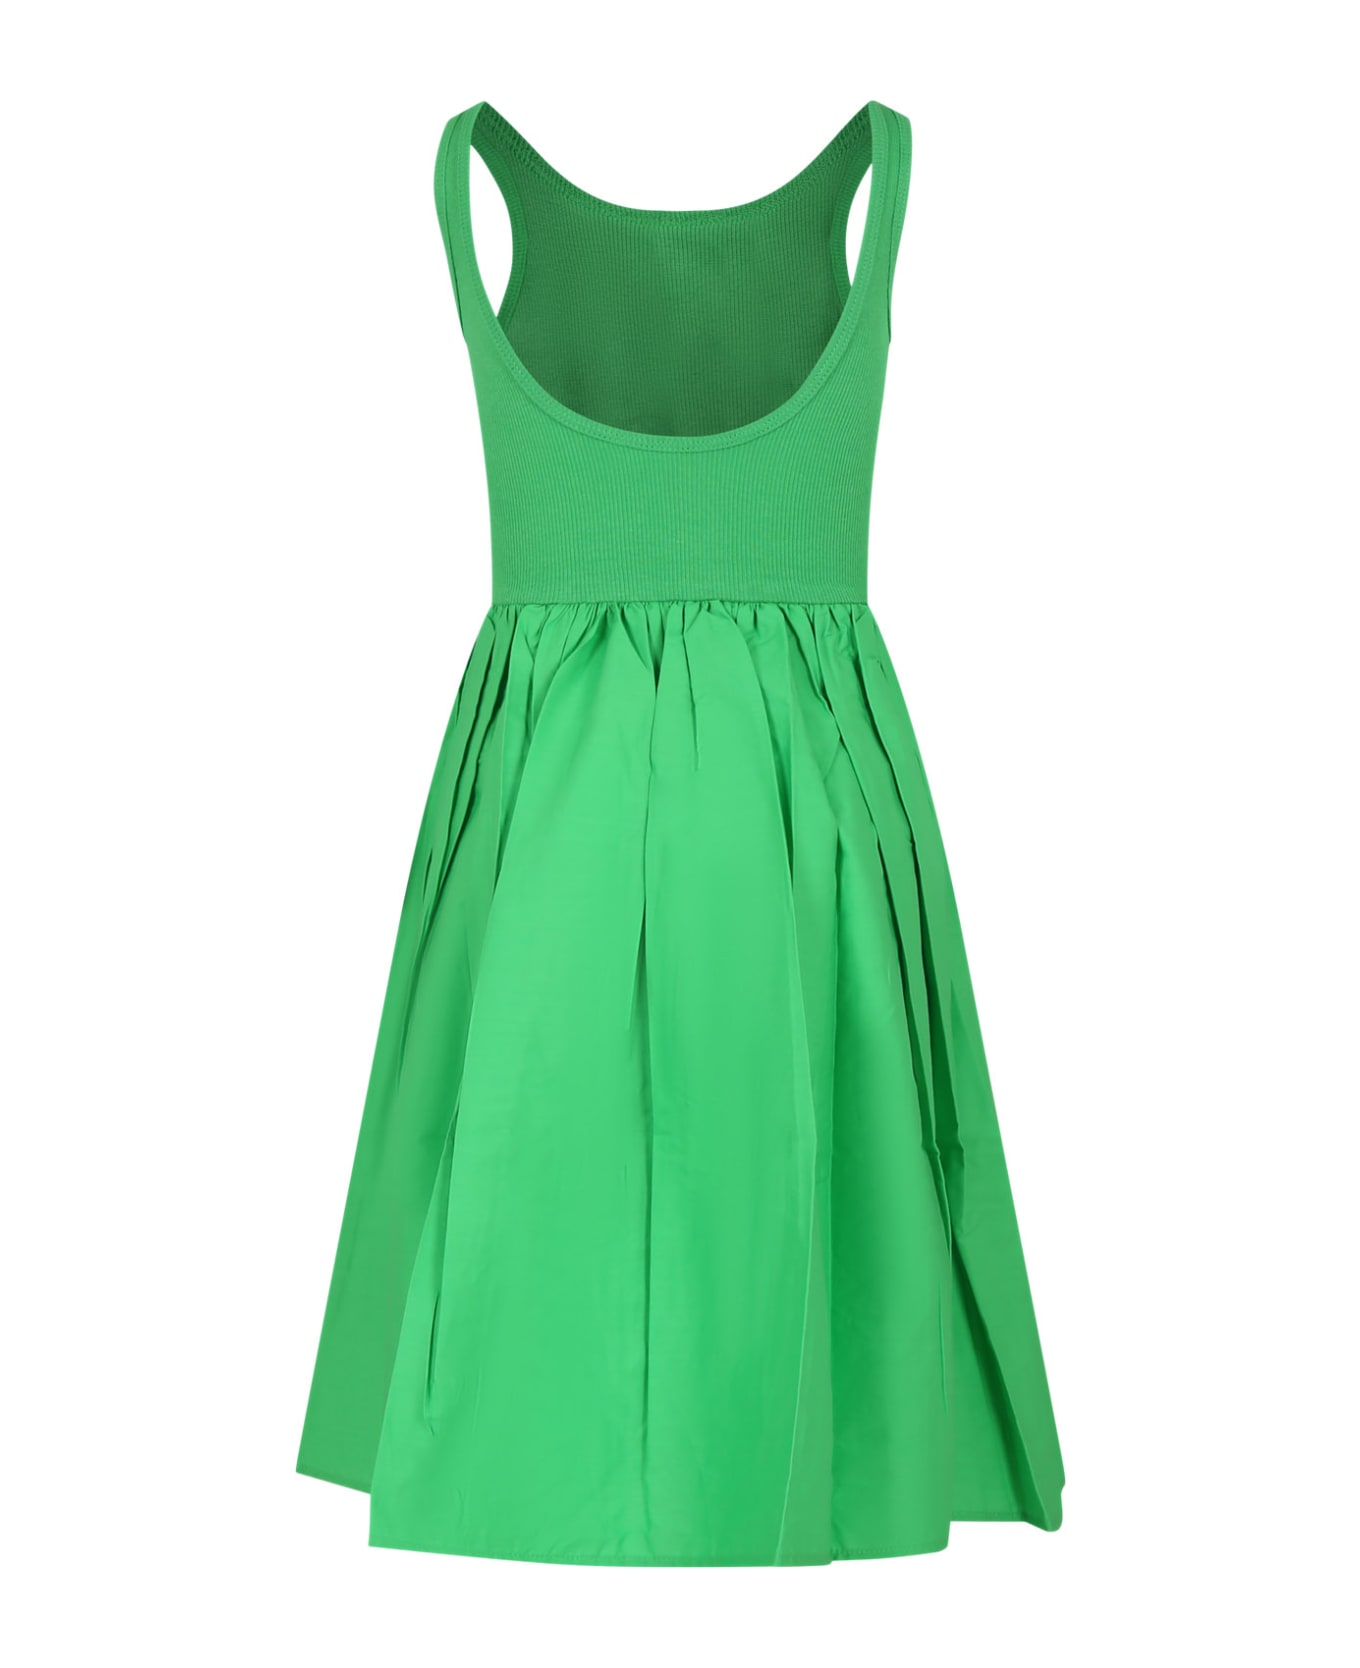 Molo Green Dress For Girl - Green